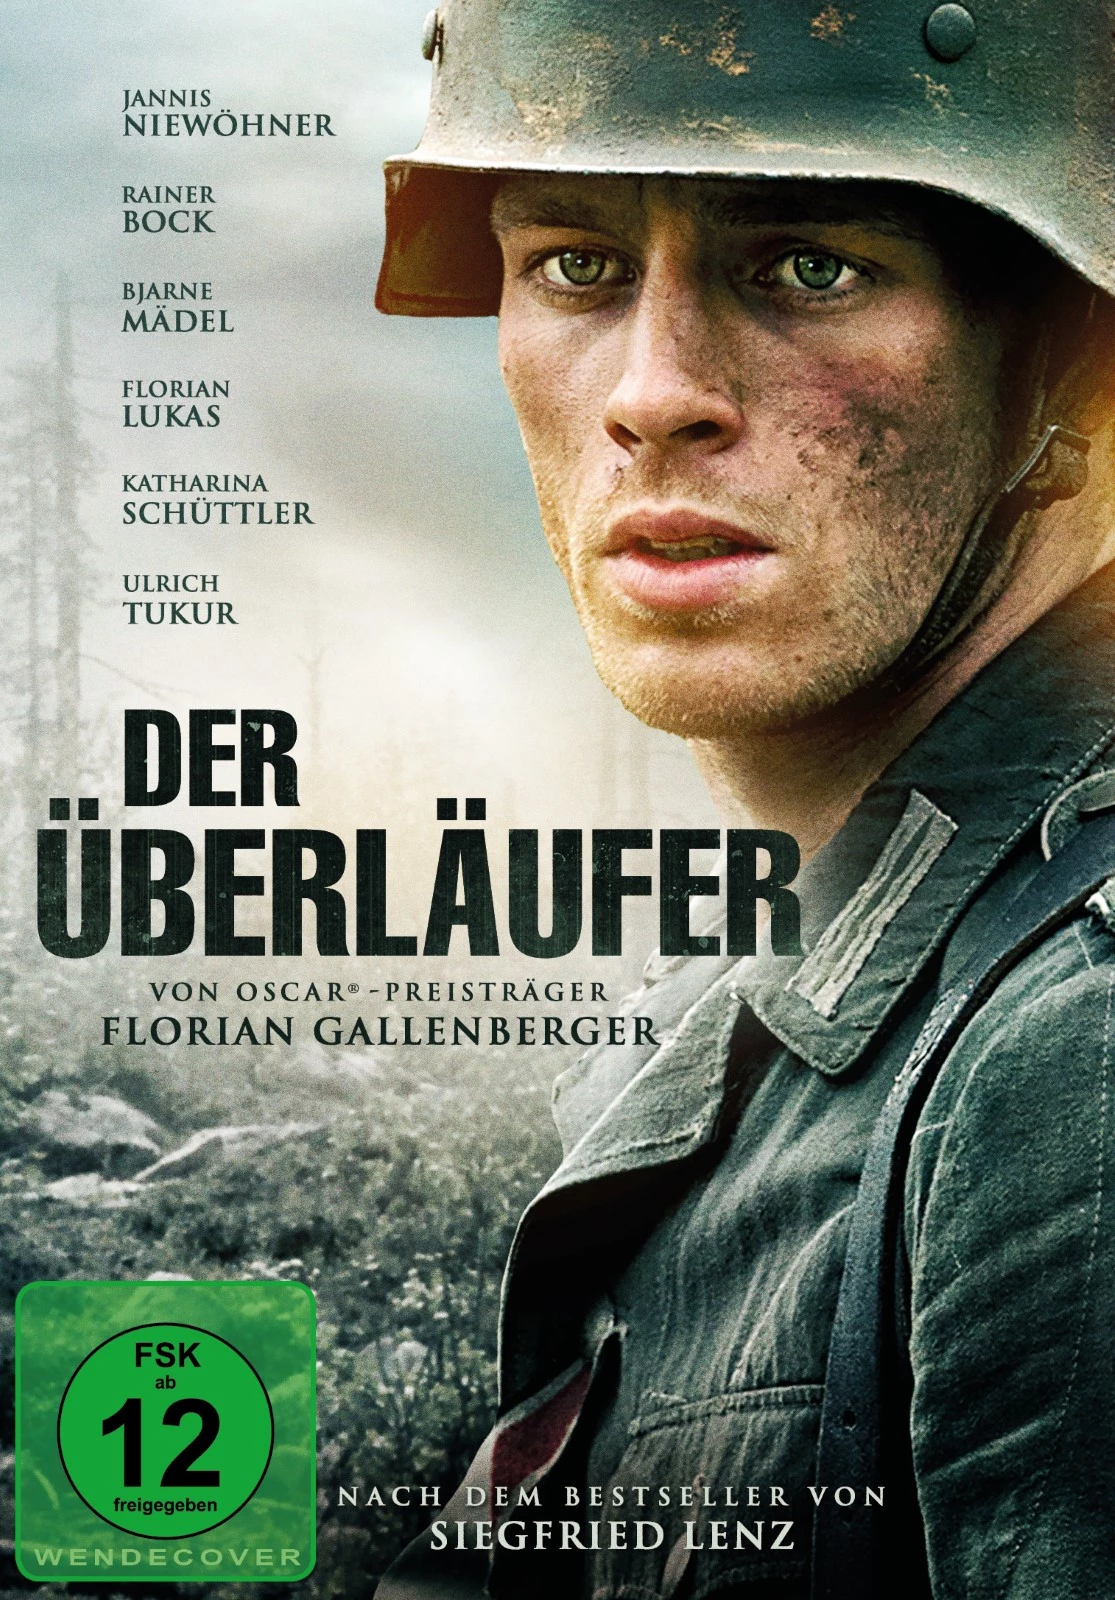 Stiahni si Filmy CZ/SK dabing Prebehlik / Der Uberlaufer (2020)(CZ)[TvRip][720p] = CSFD 73%